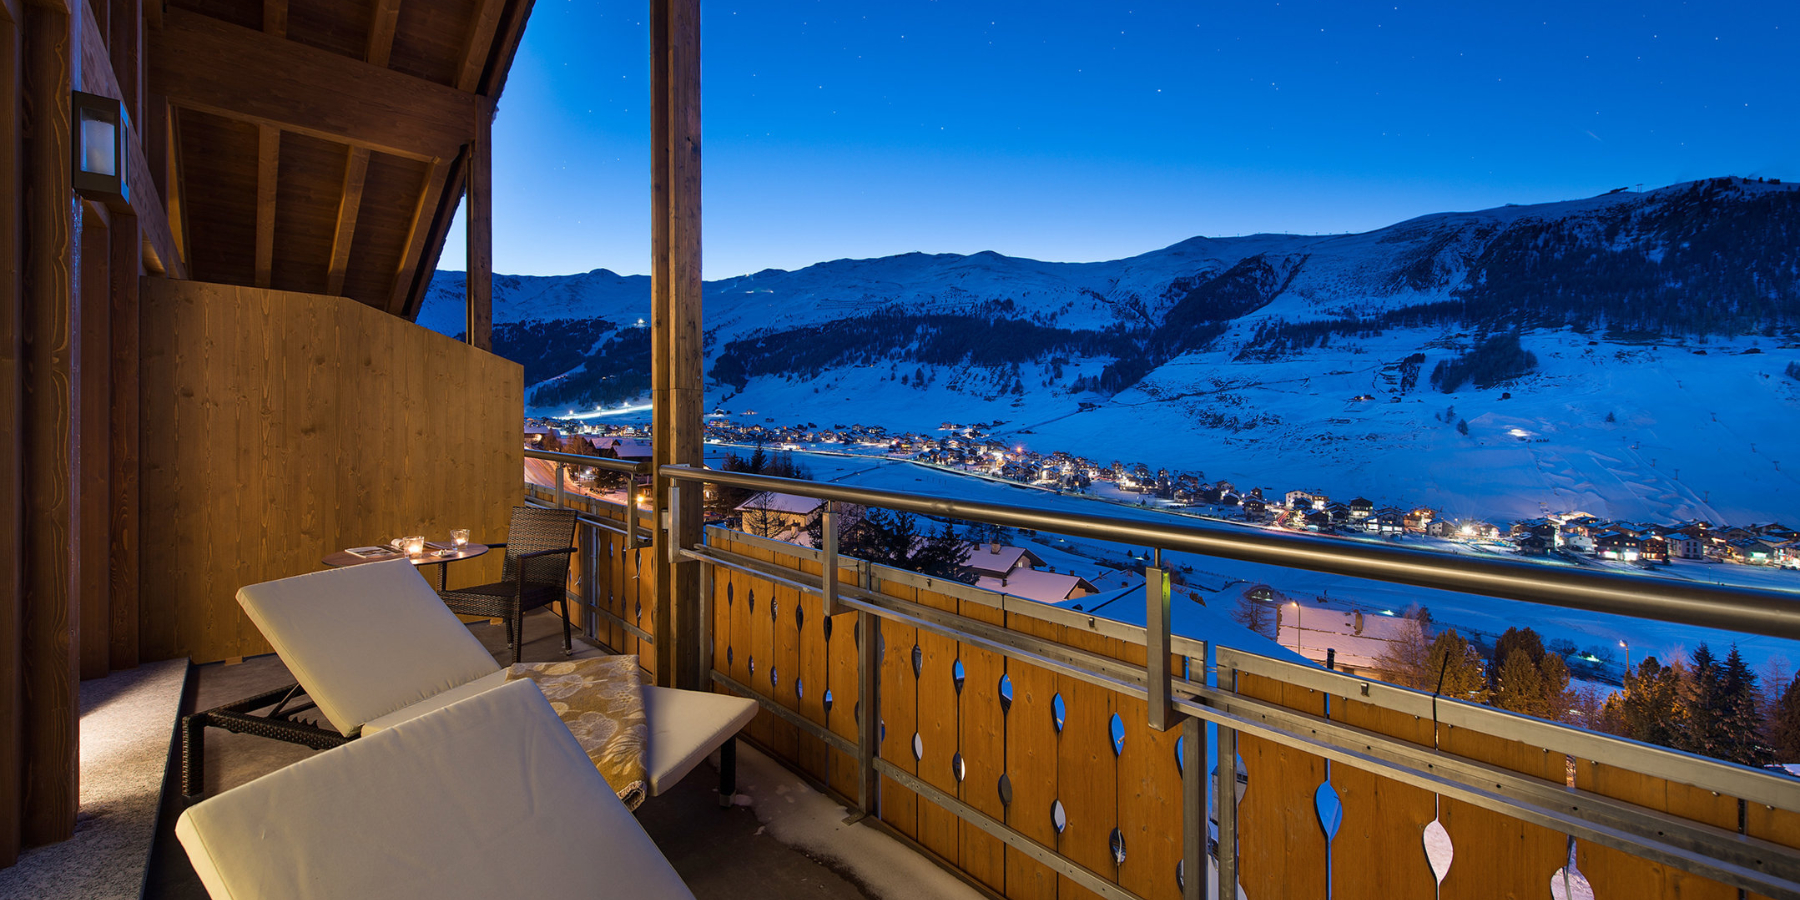 L'hotel Baita Montana Spa & Resort si prepara ad accogliervi!: Immagine elenchi